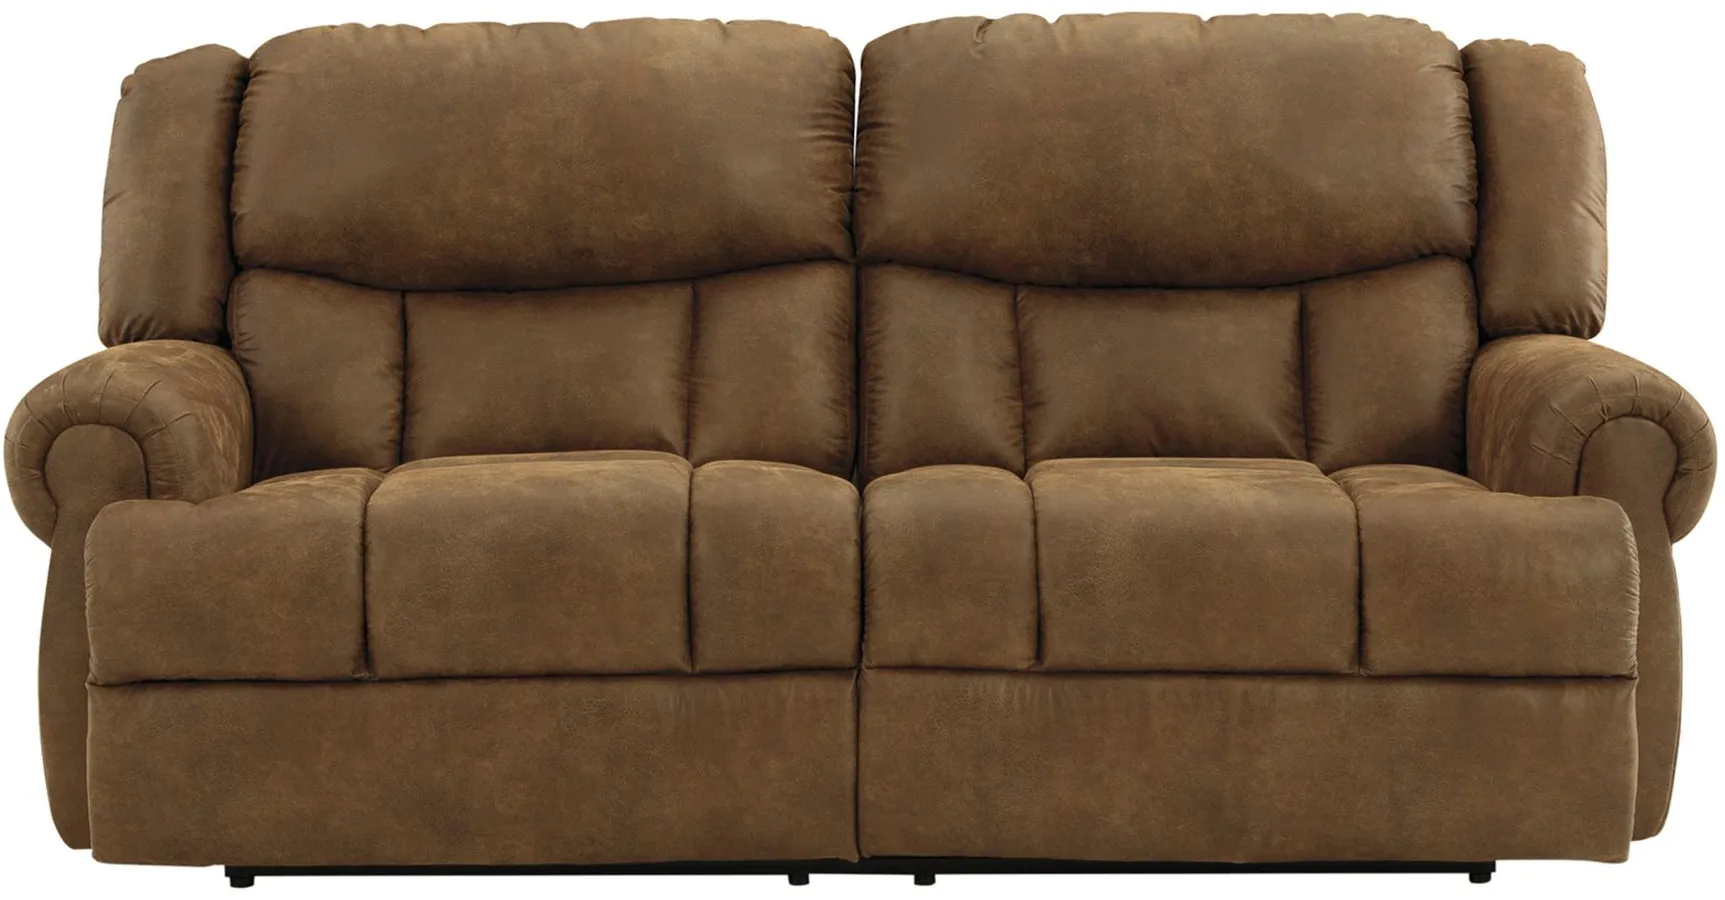 Boothbay Reclining Sofa in Auburn by Ashley Furniture